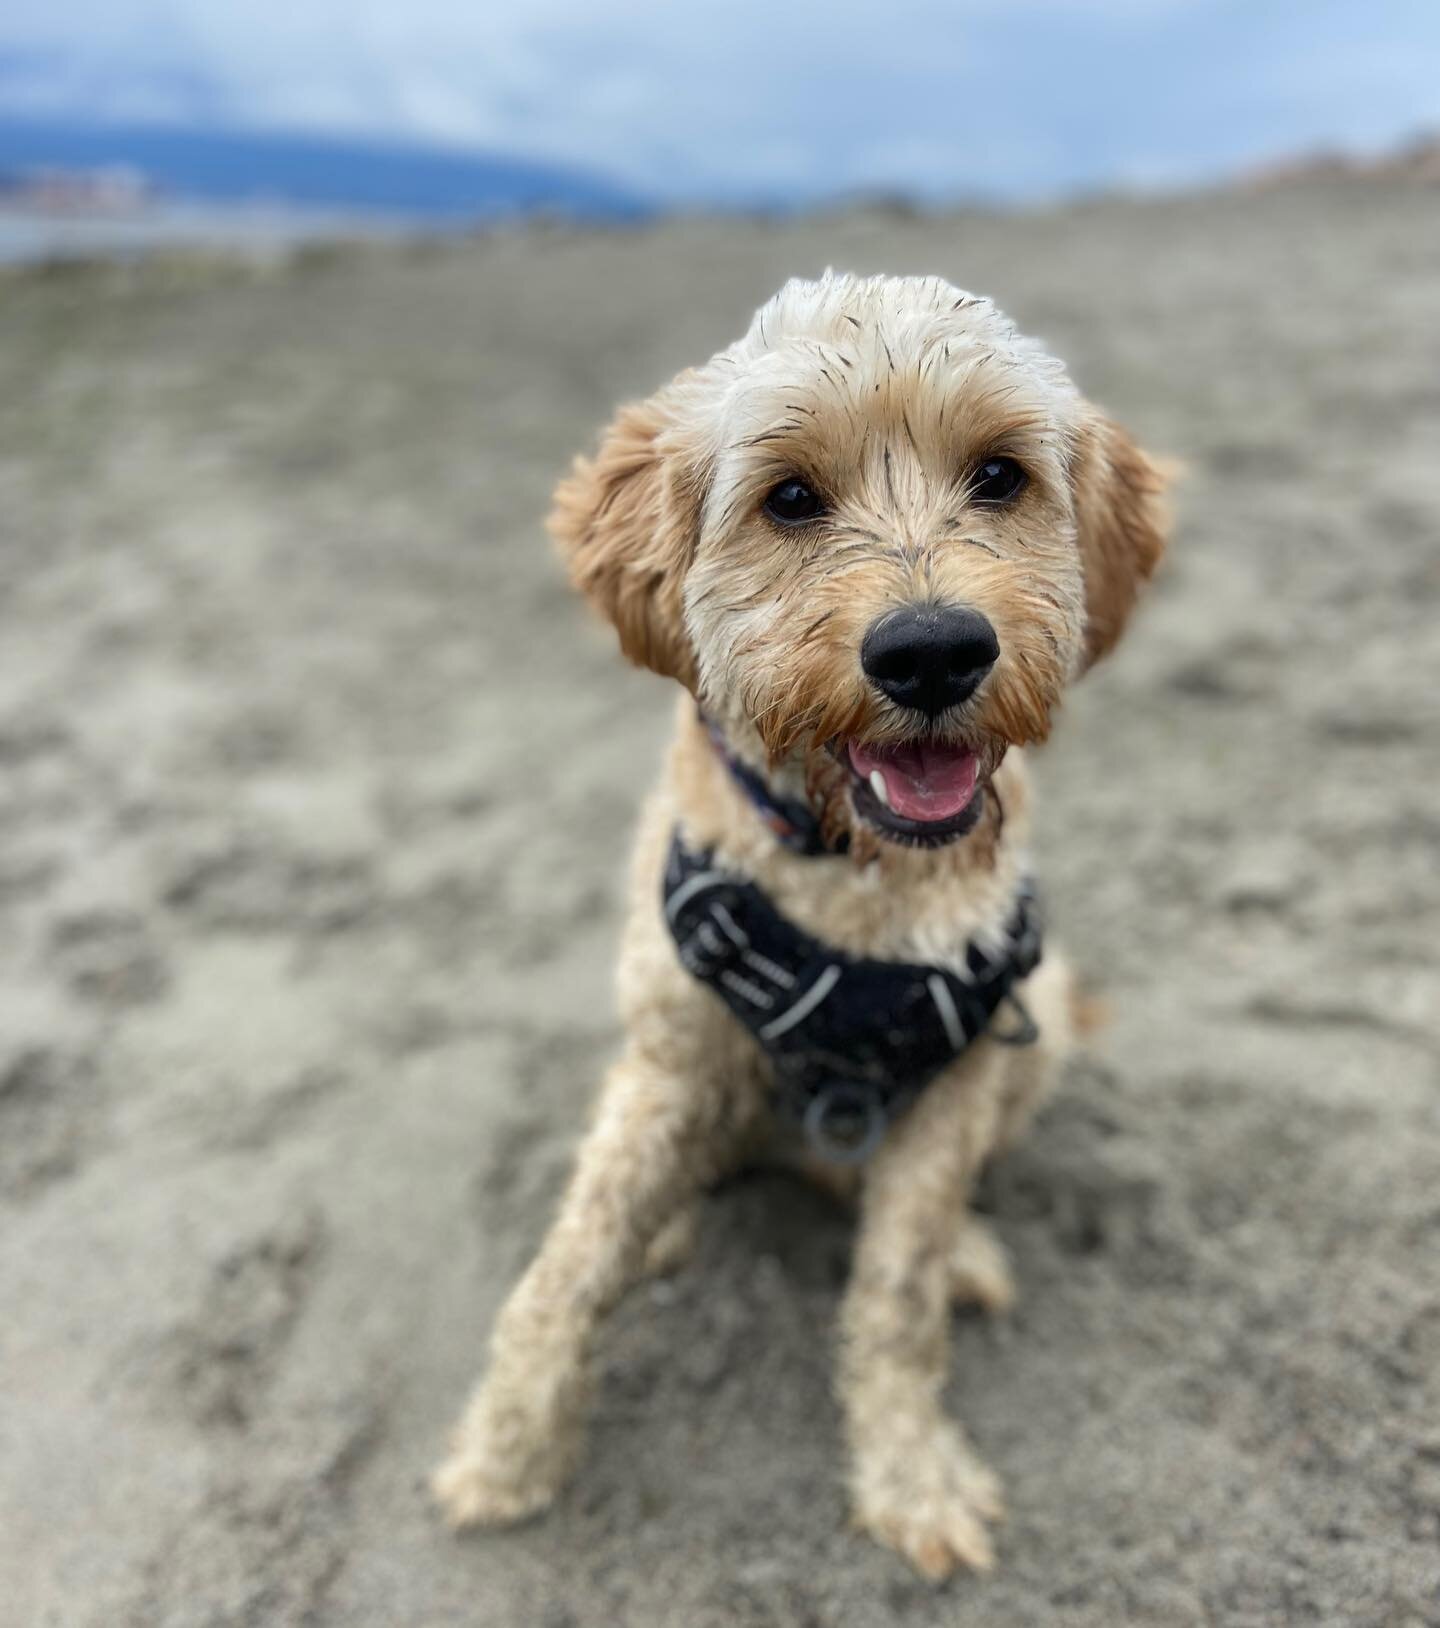 Beach anyone!! Feta is loving her summer in the sand #peachesncreamdoodles #doubledoodle #doubledoodlesofinstagram